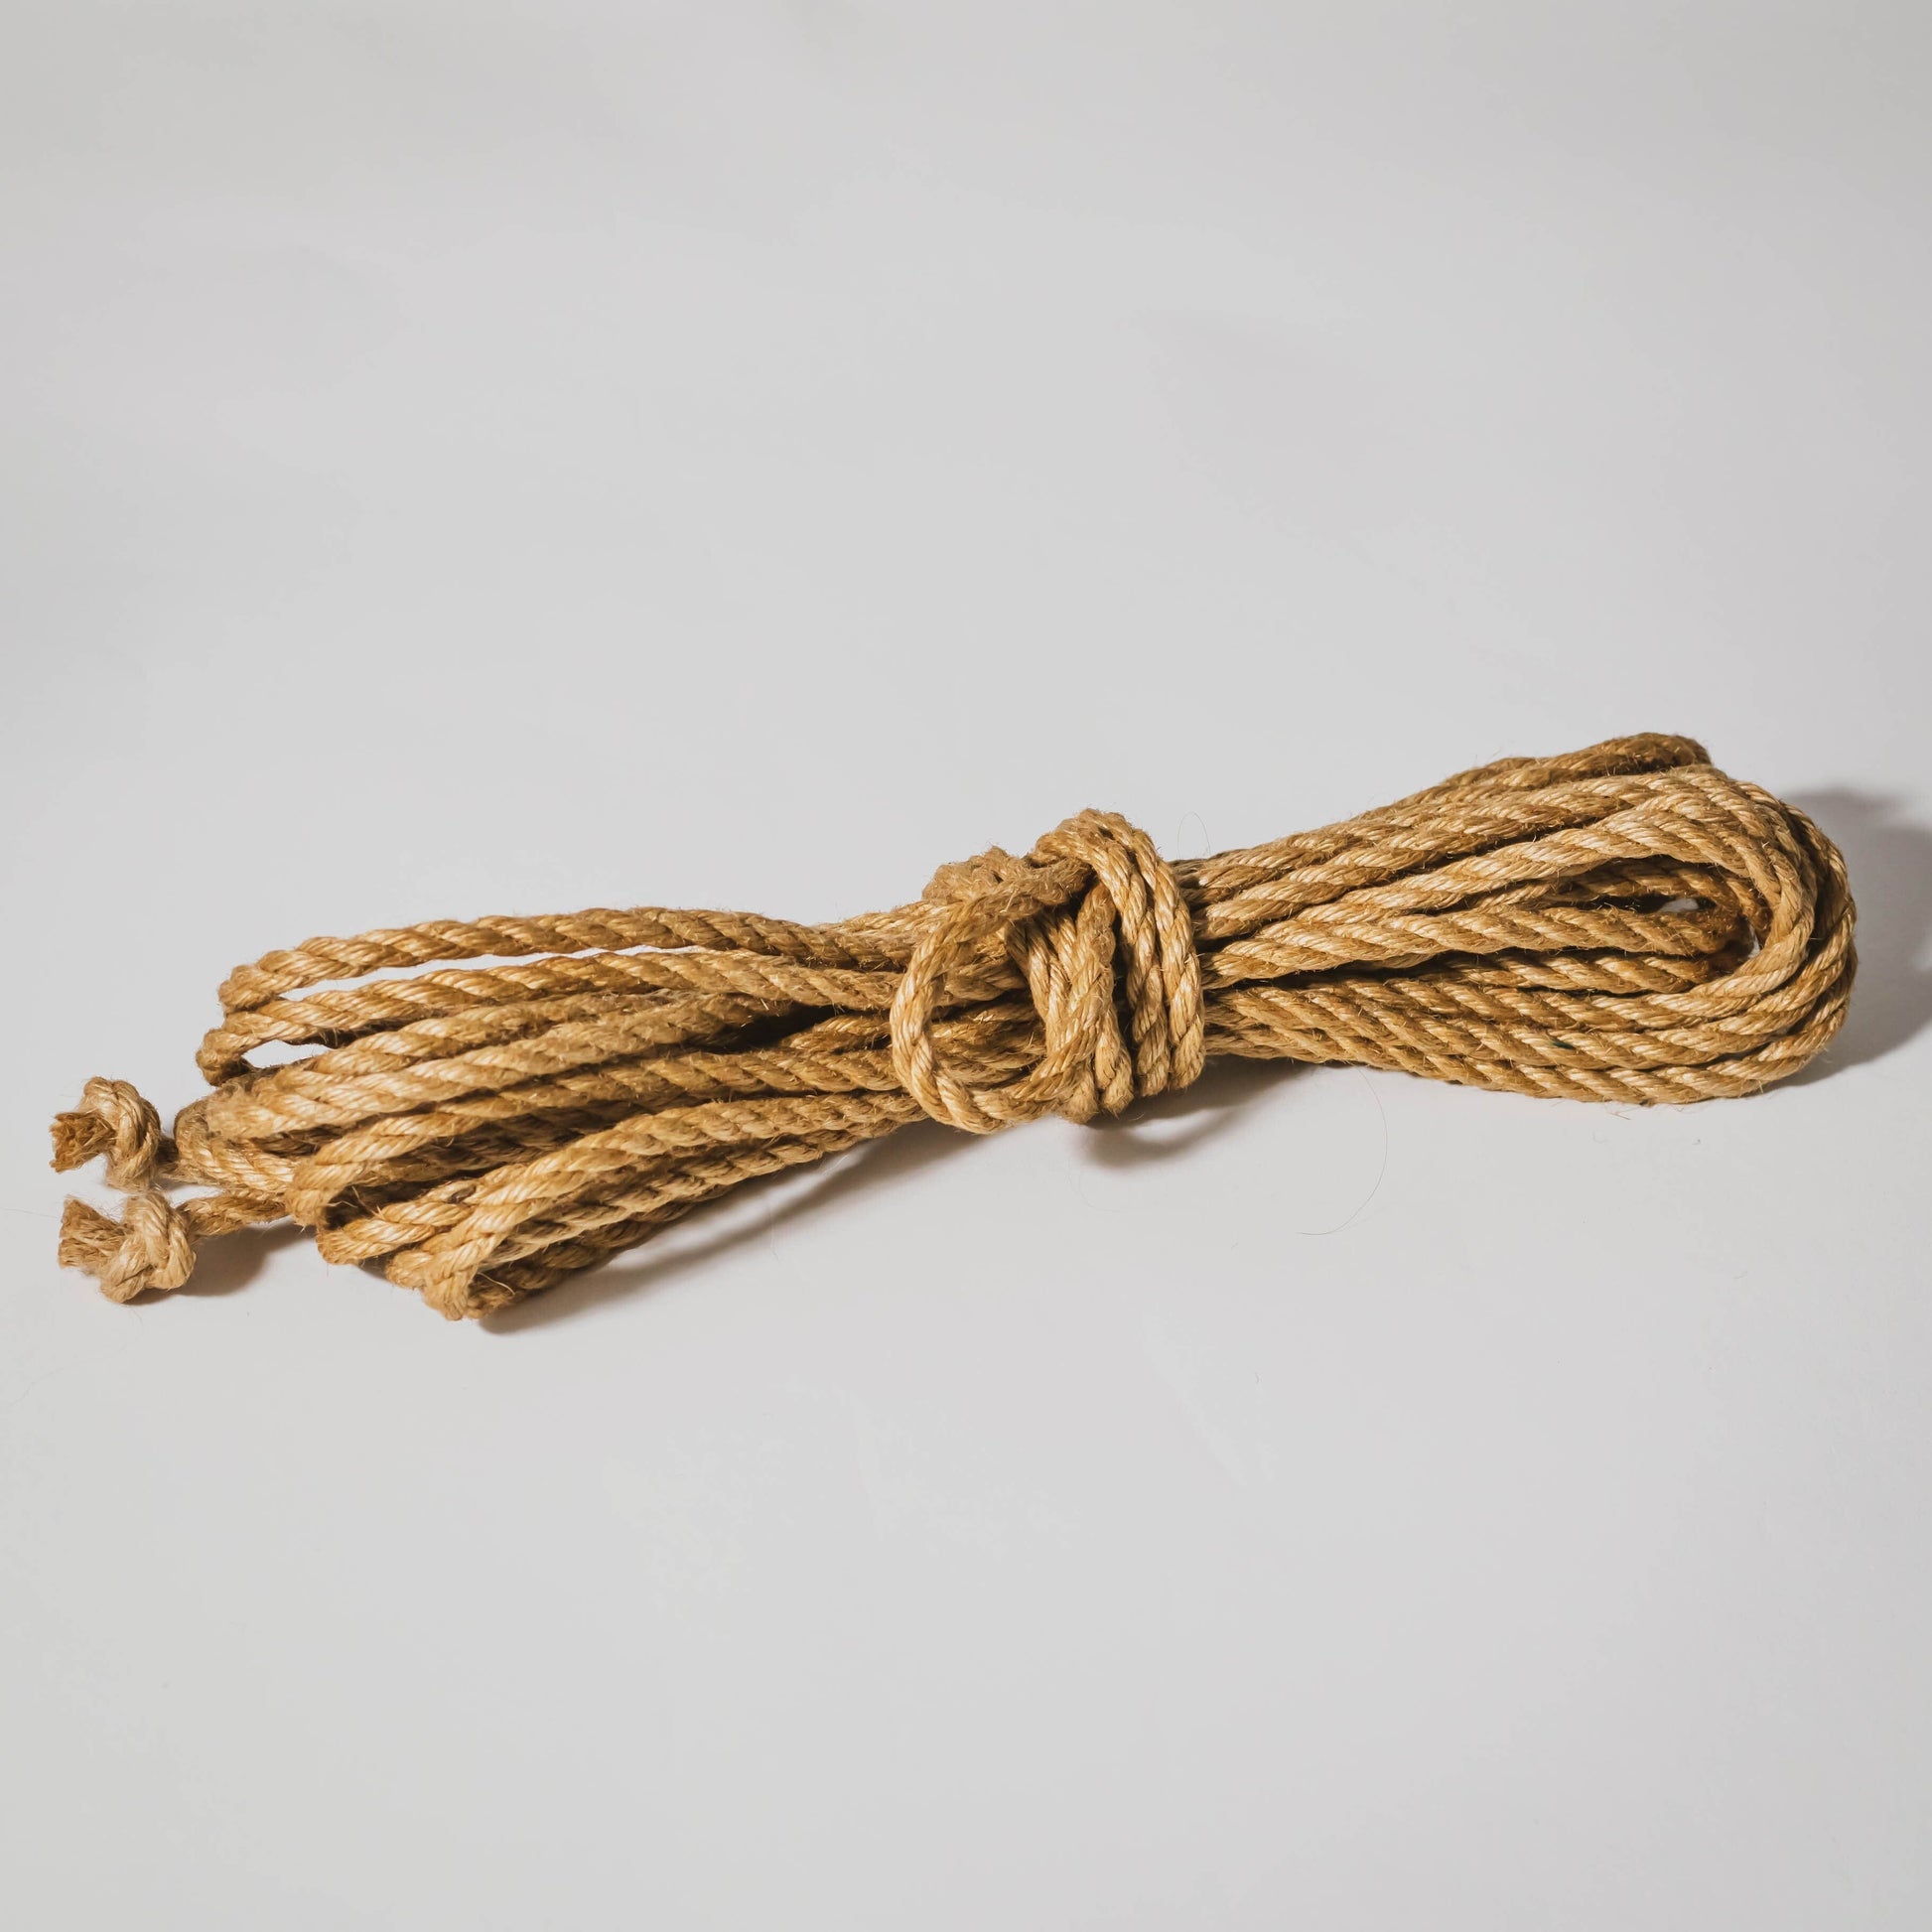 Grade B Rope - treated 6mm Jute Rope